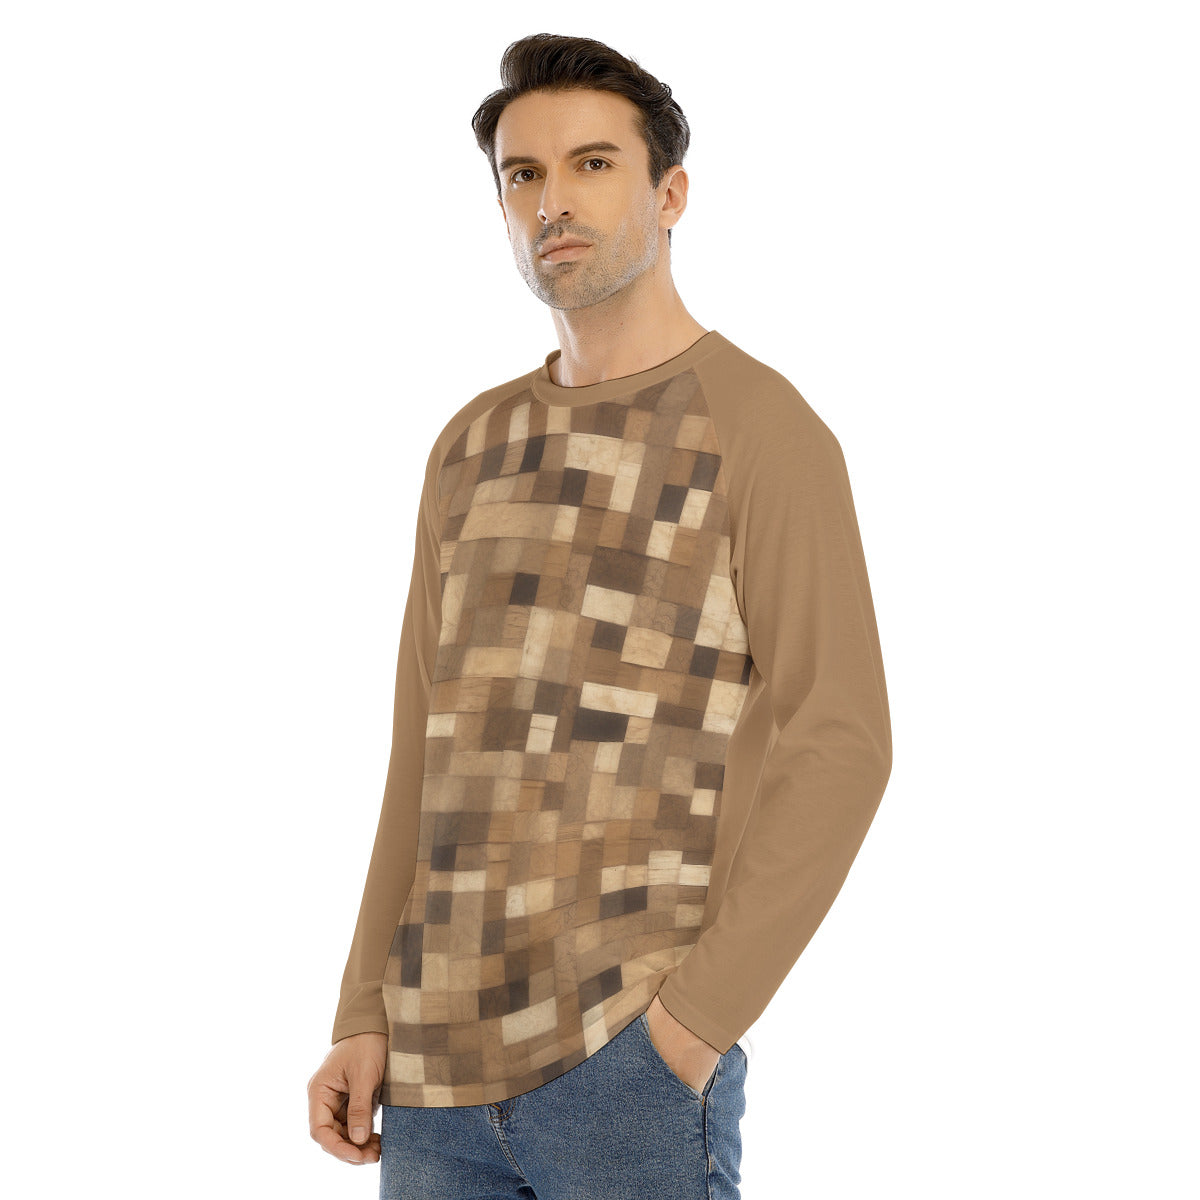 Quilt 105 -- Men's Long Sleeve T-shirt With Raglan Sleeve